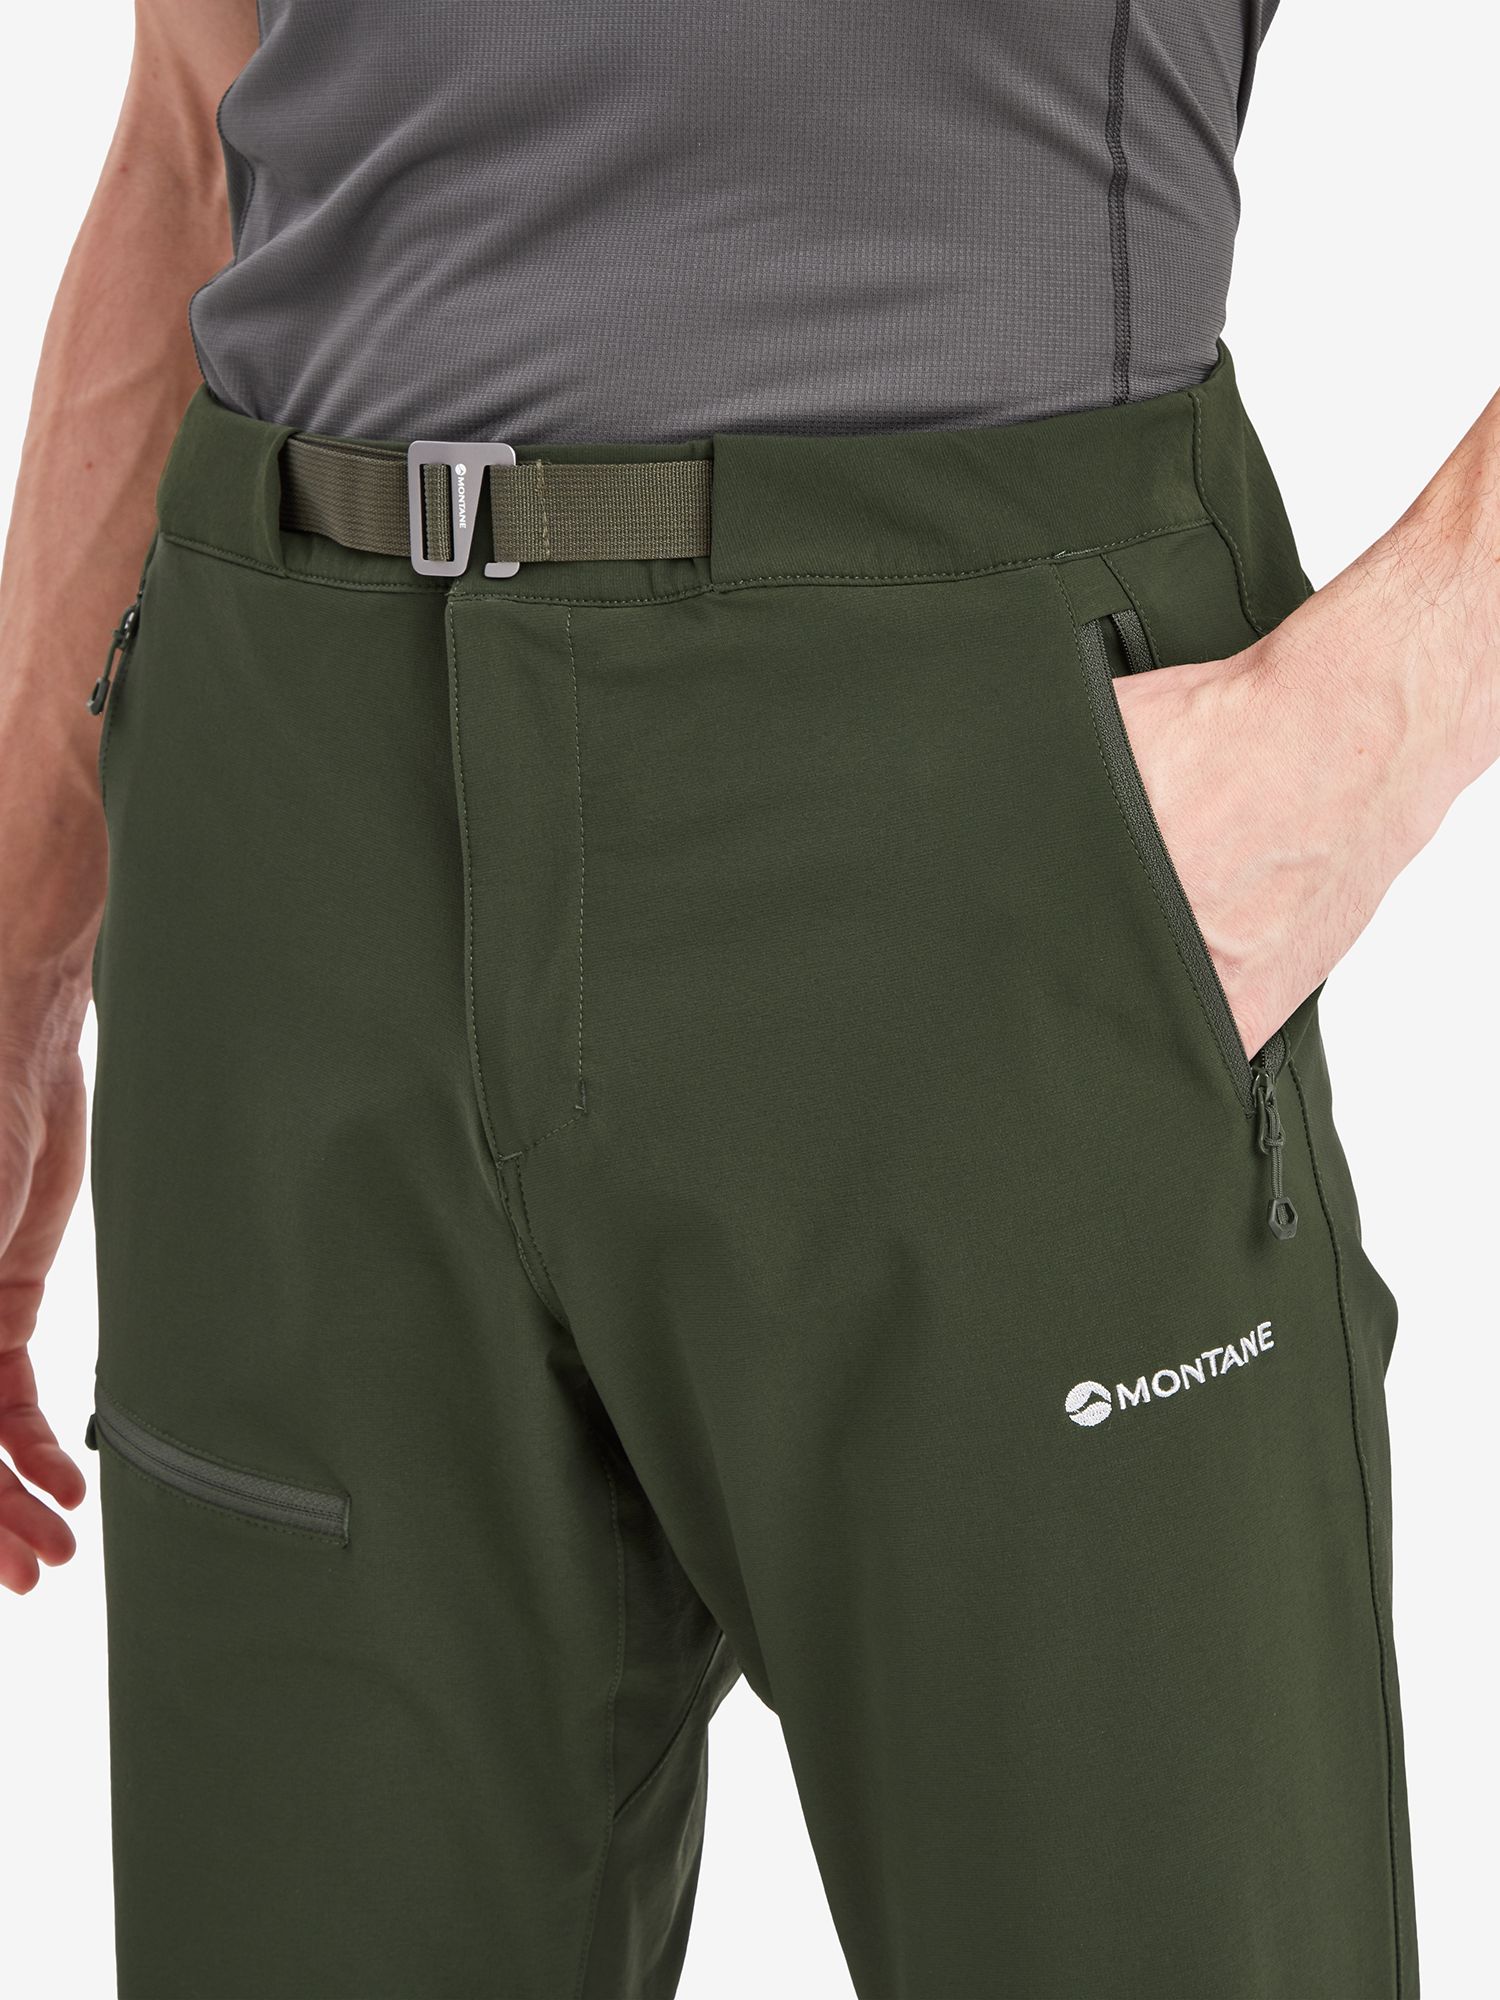 Montane Tenacity Hiking Trousers, Oak Green, S Regular